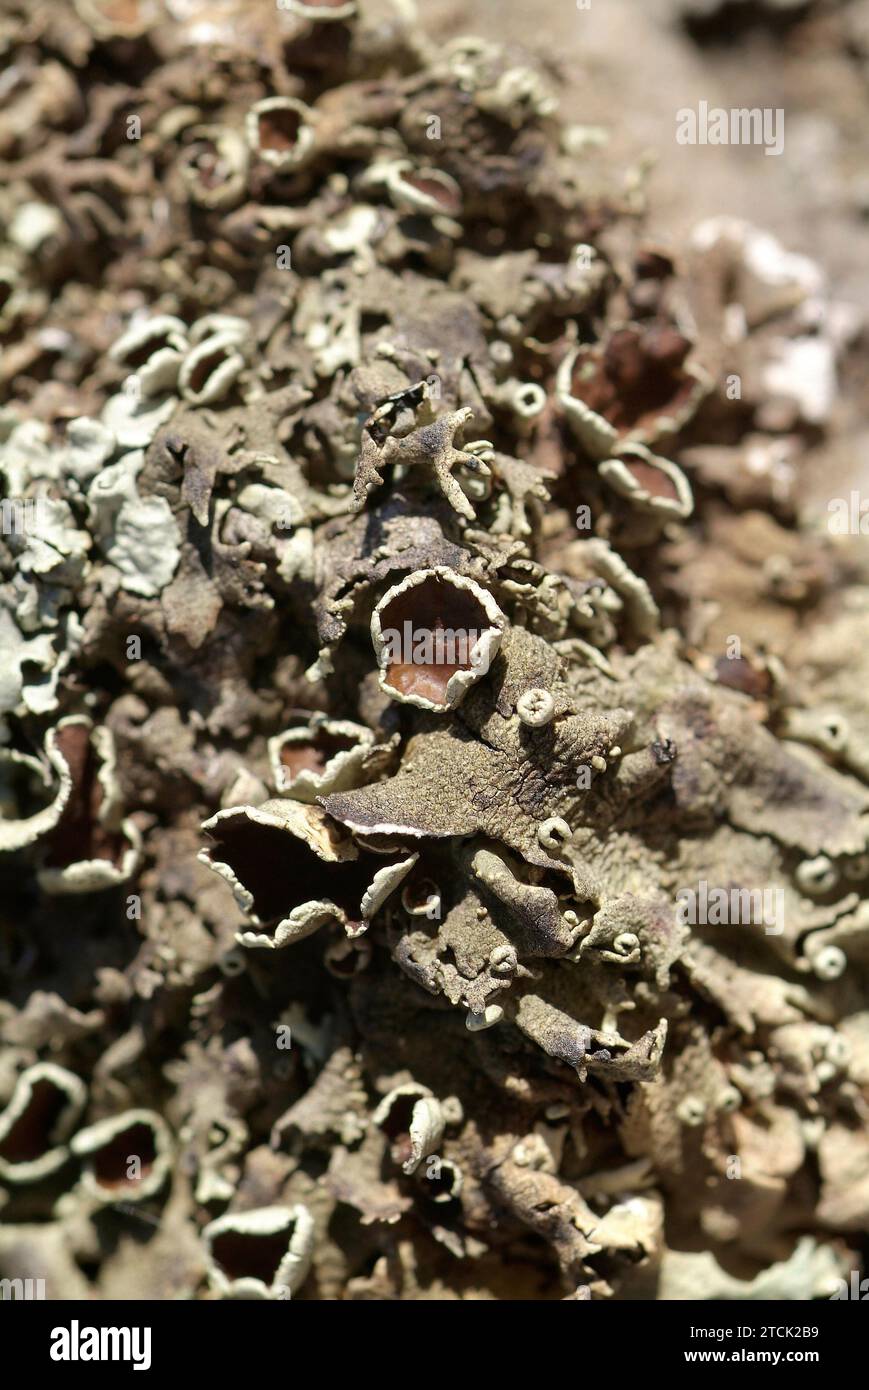 Xanthoparmelia conspersa or Parmelia conspersa is a foliose lichen. Thallus and apothecia detail. This photo was taken in La Albera, Girona province, Stock Photo